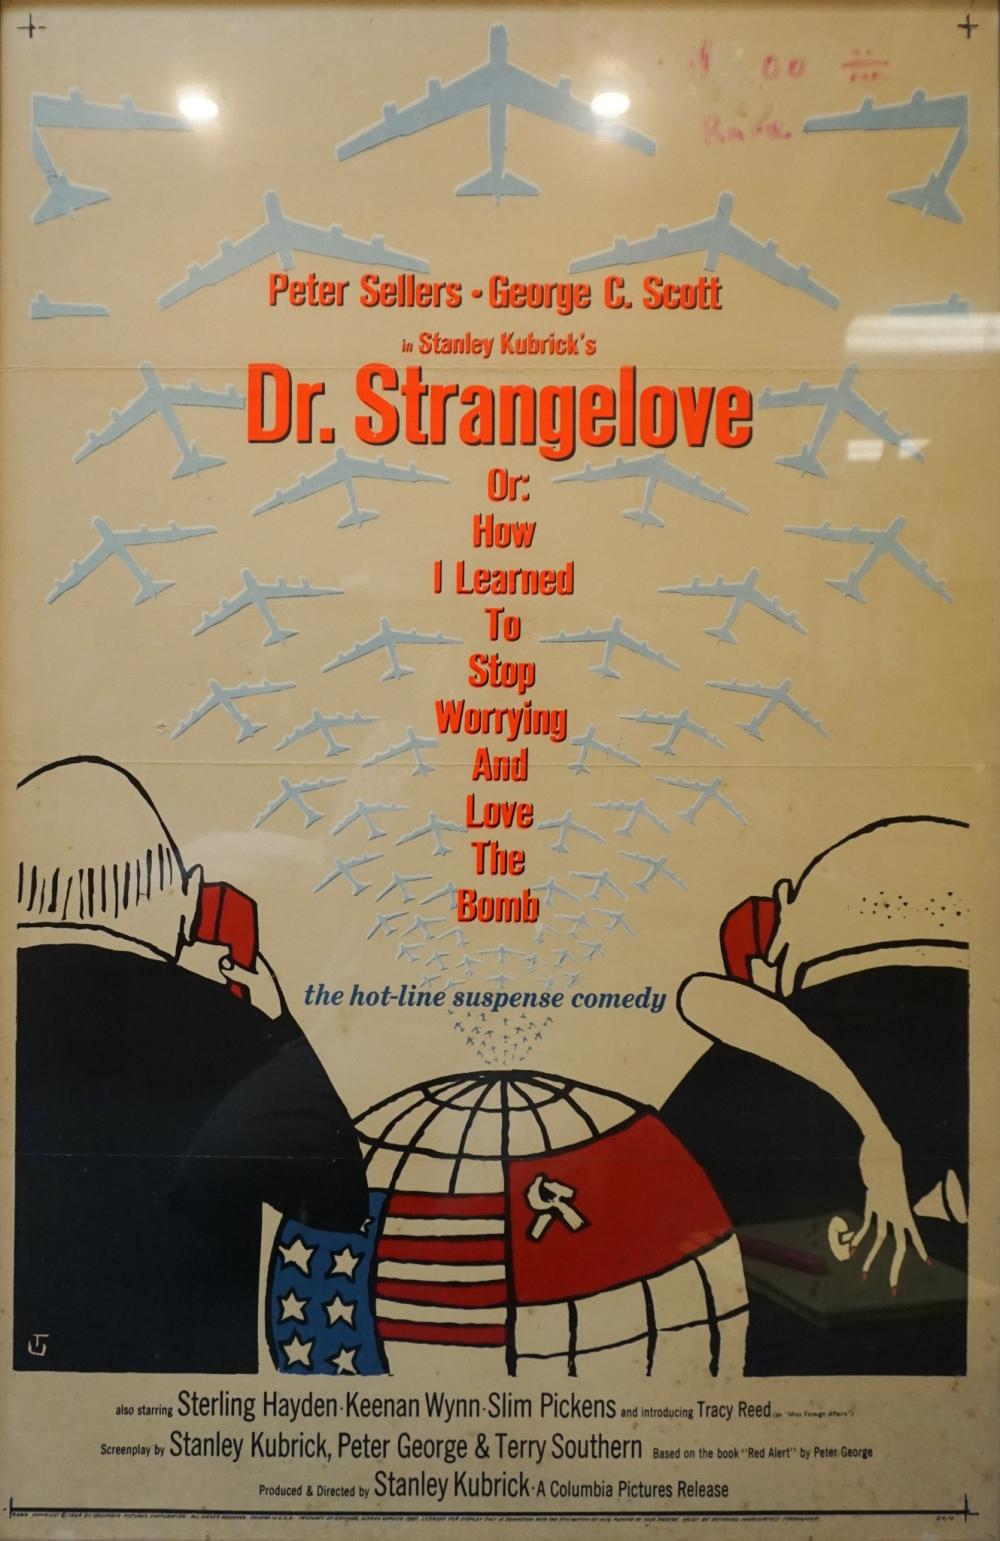 'DR. STRANGELOVE' ORIGINAL THEATRICAL